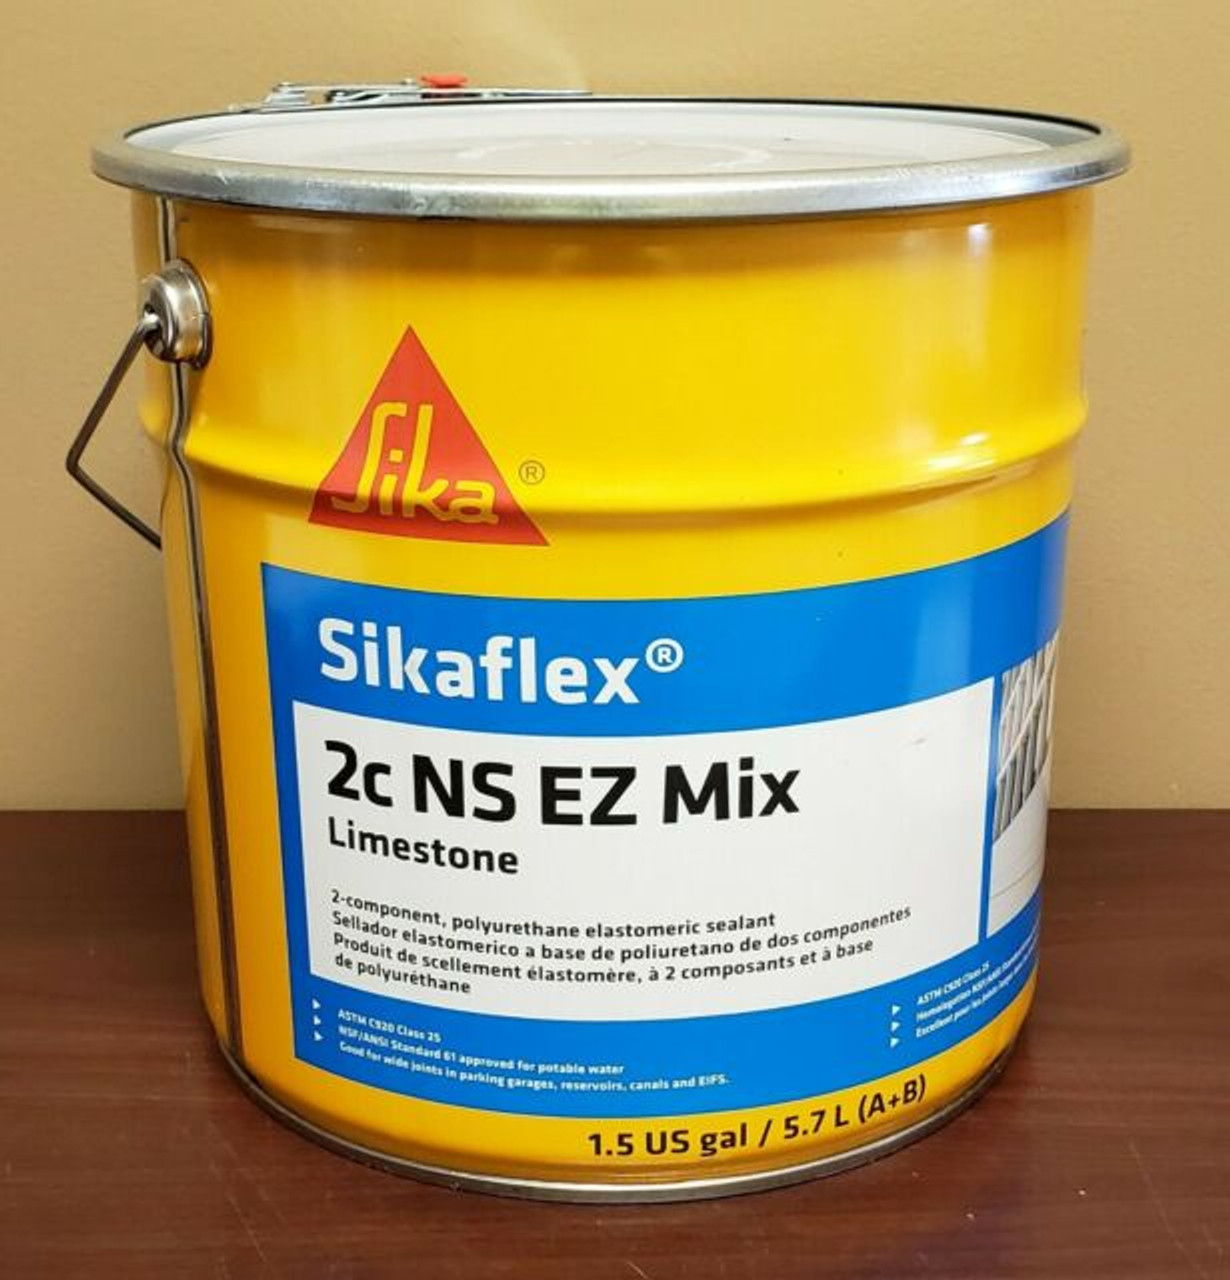 Sikaflex 2C NS EZ Mix Limestone